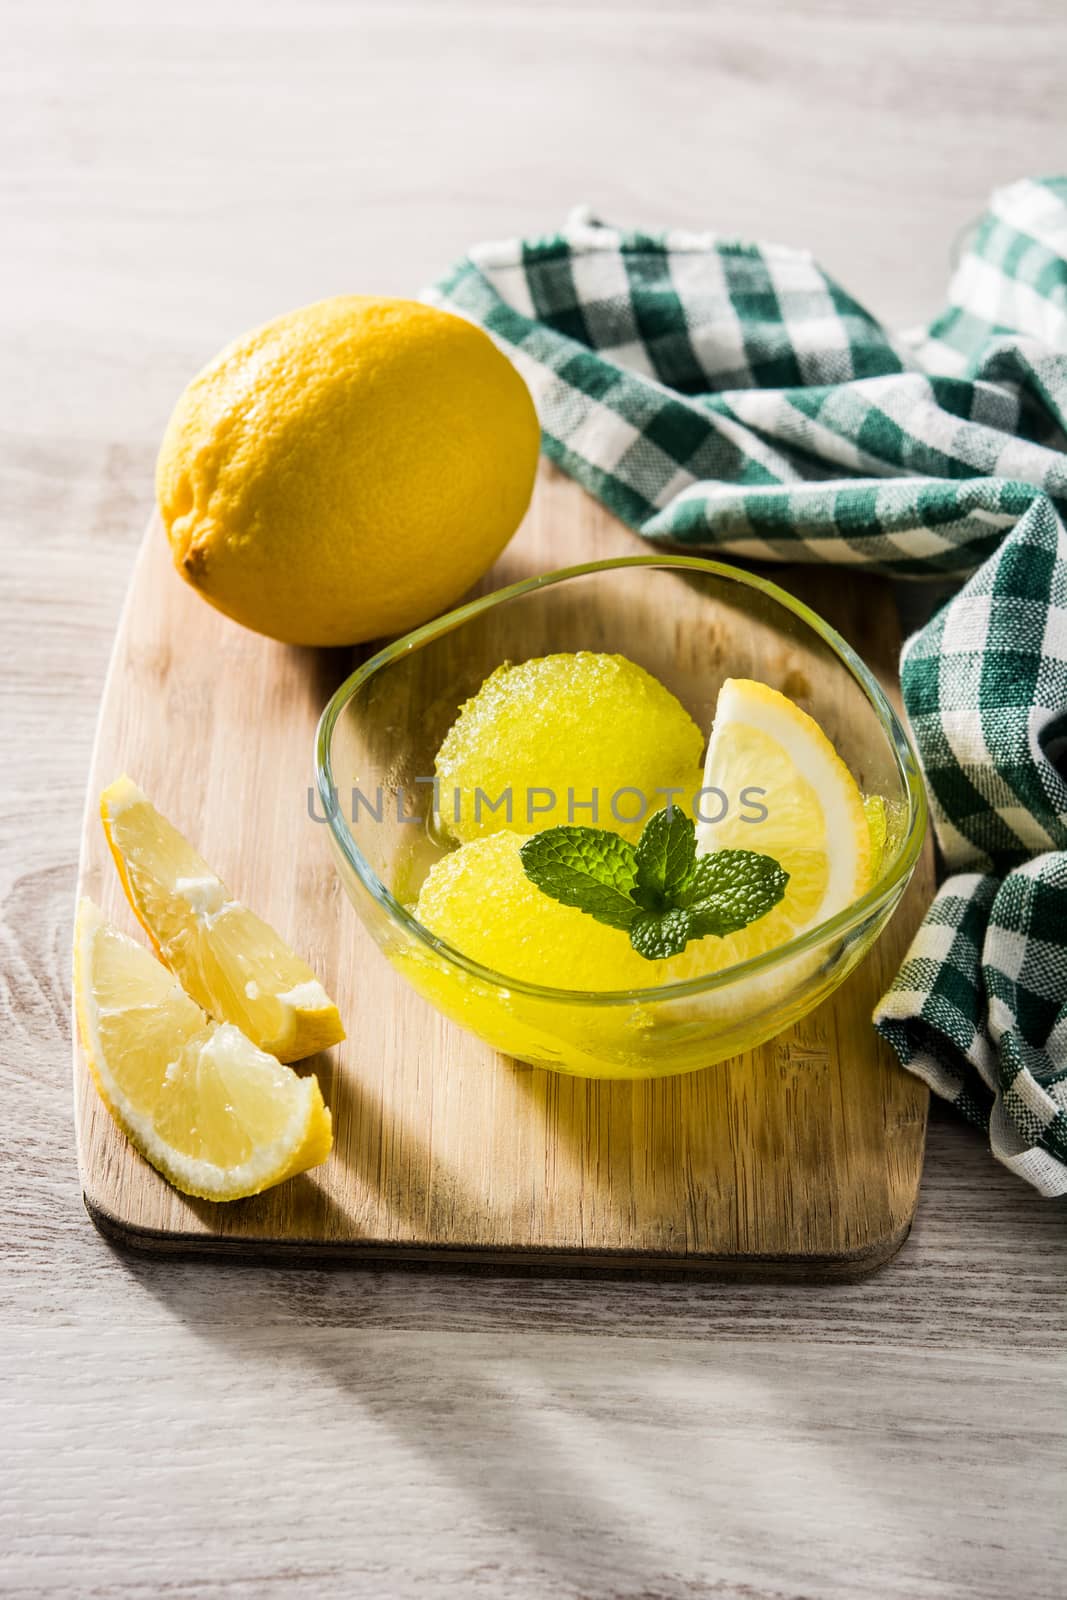 Lemon sorbet in glasses  by chandlervid85